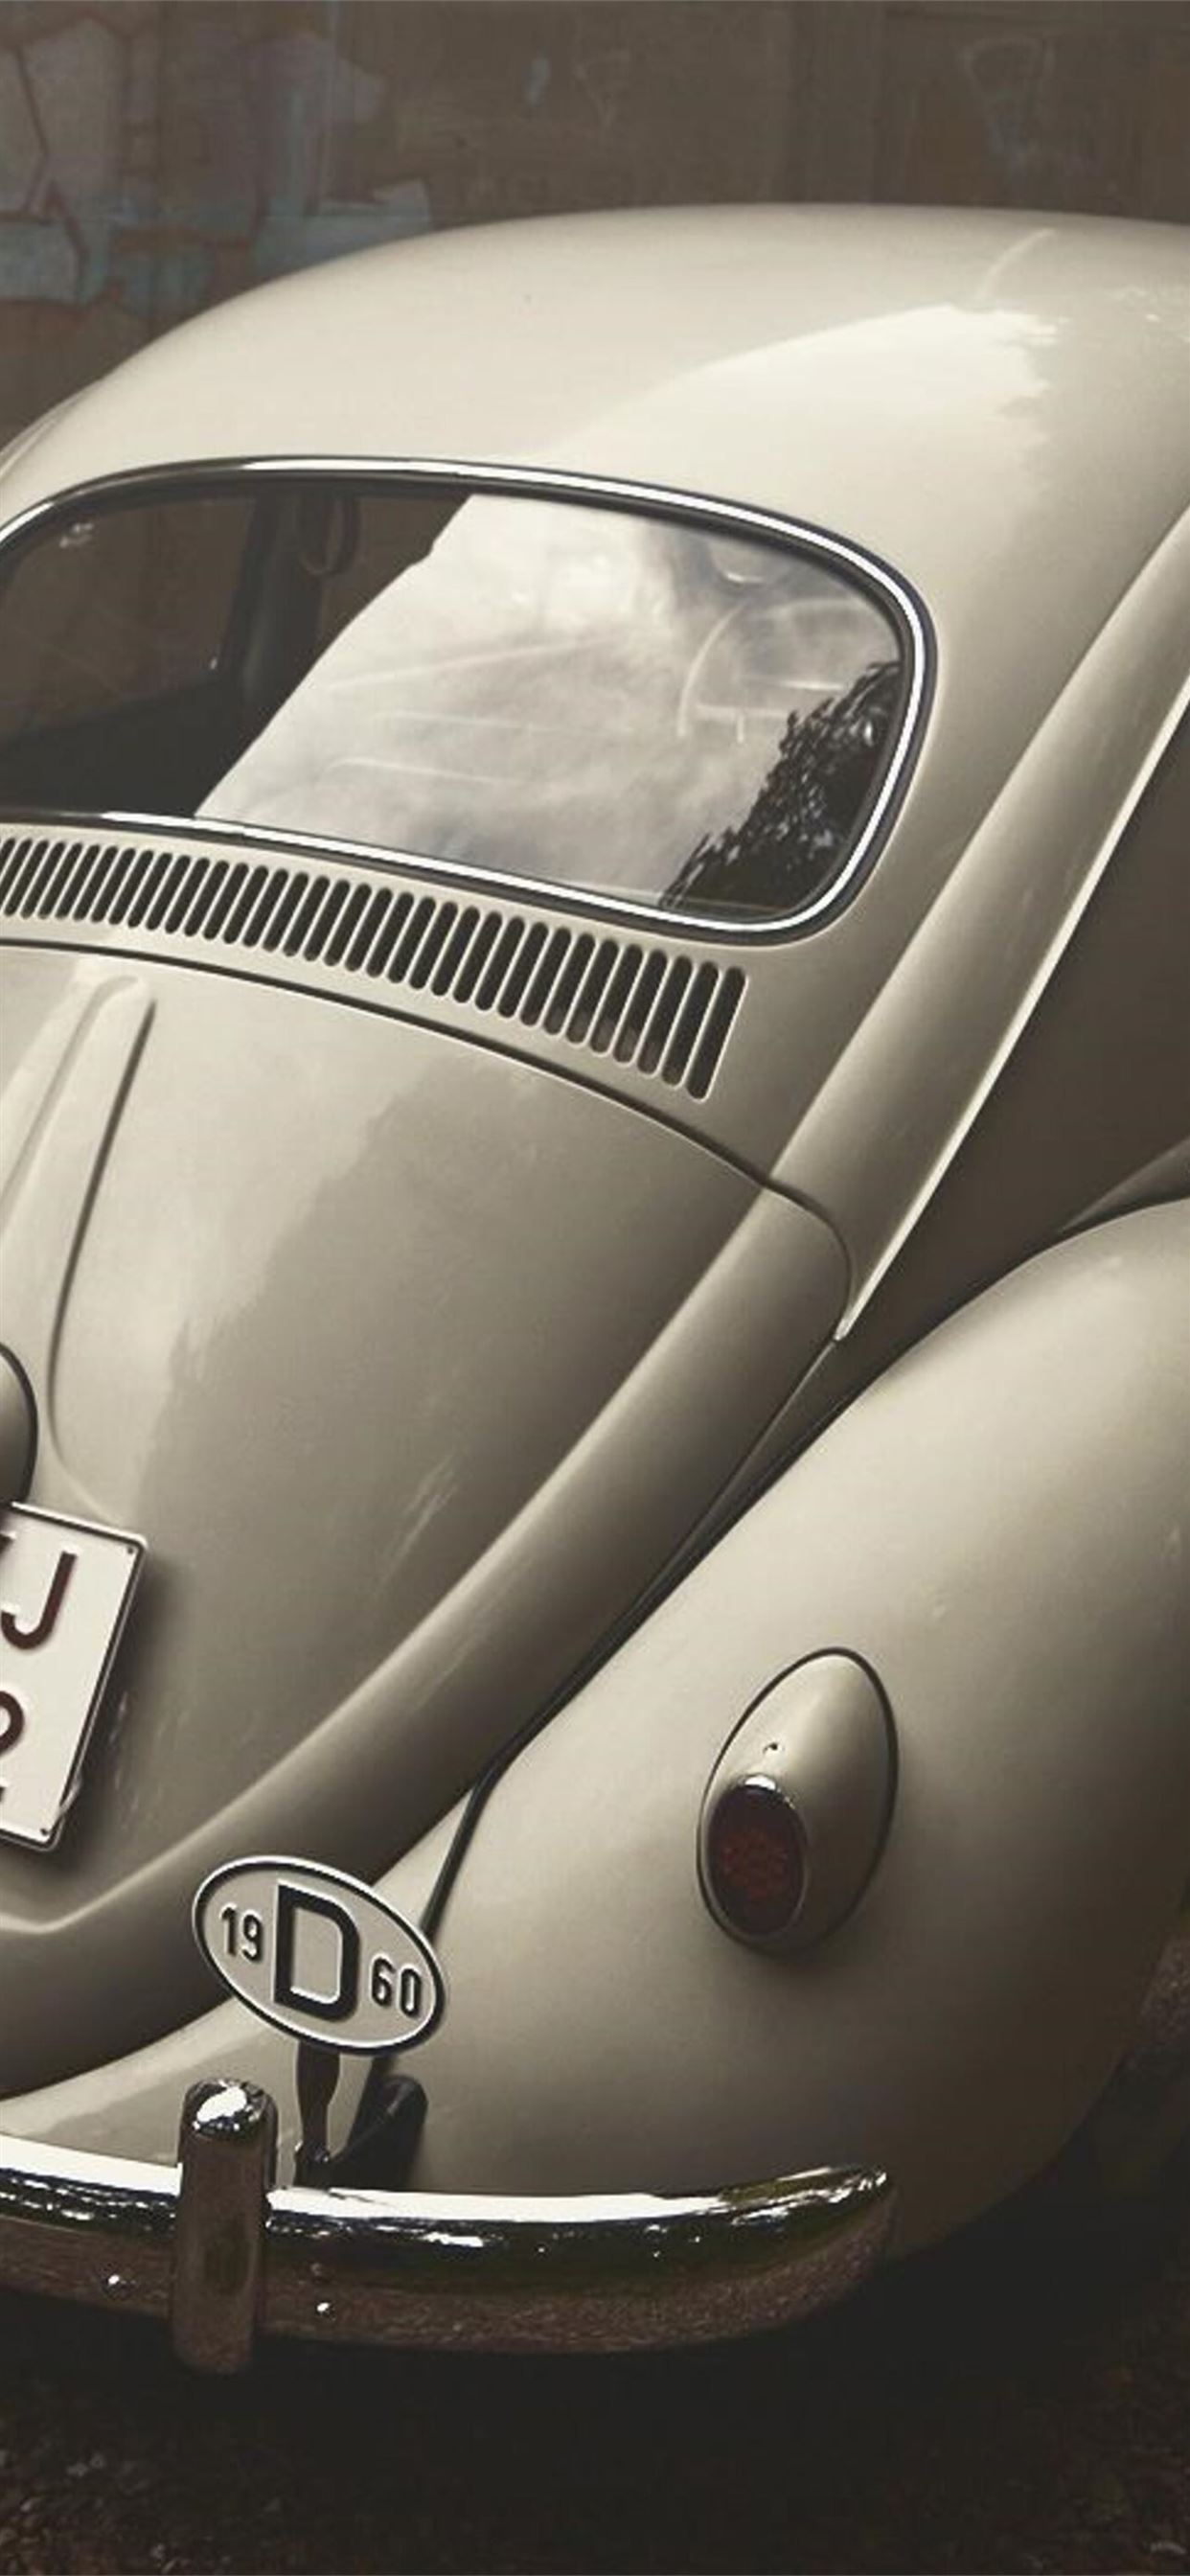 Volkswagen Beetle Vintage Samsung Galaxy Note 9 8 ... iPhone Wallpapers  Free Download